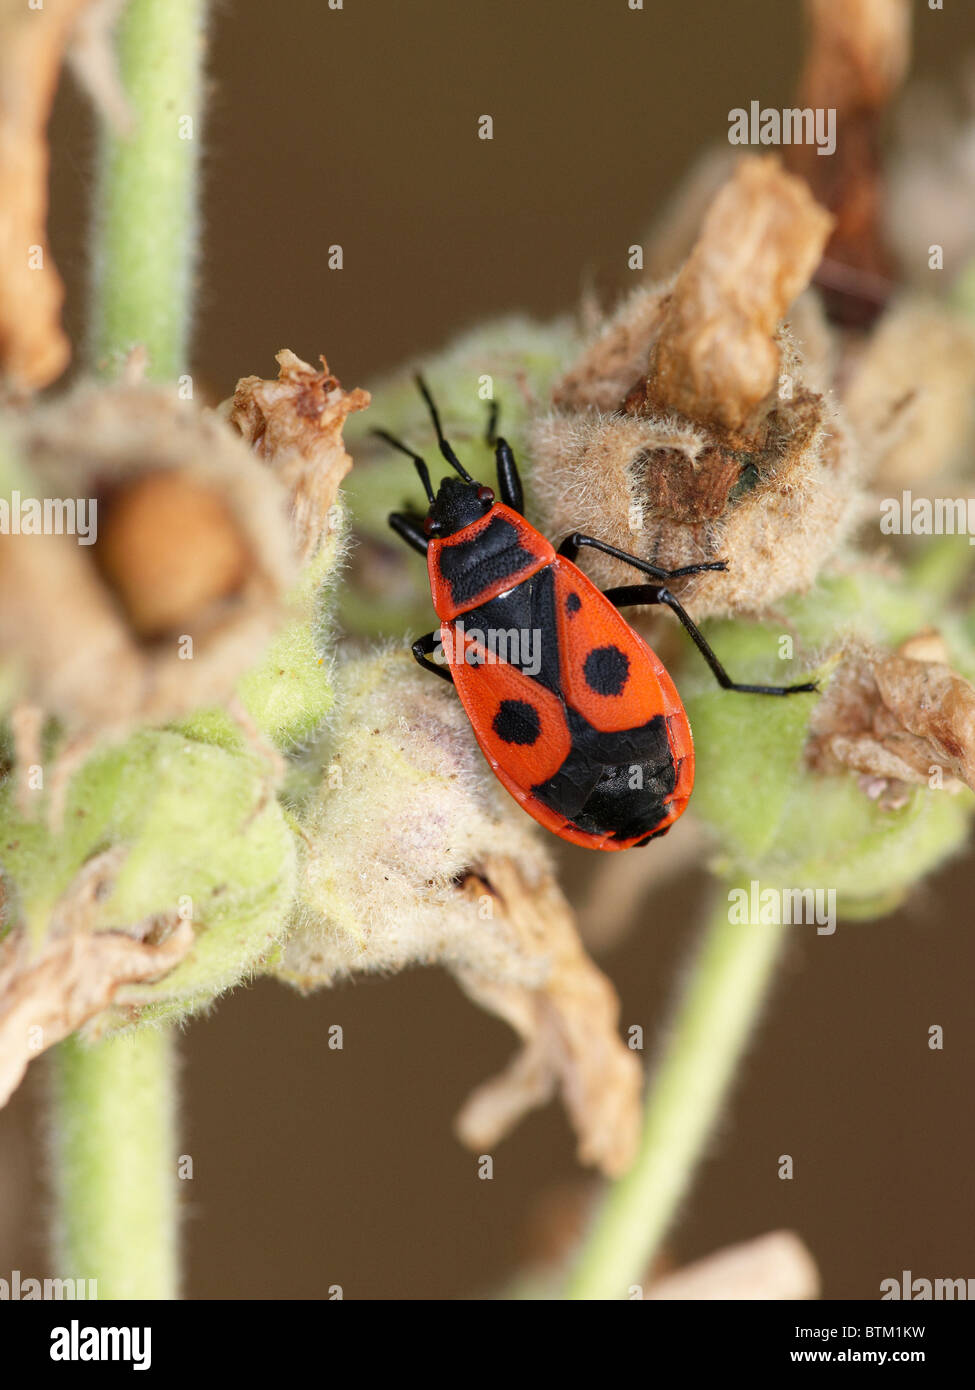 Firebug, Central Russia. Scientific name: Pyrrhocoris apterus. Stock Photo